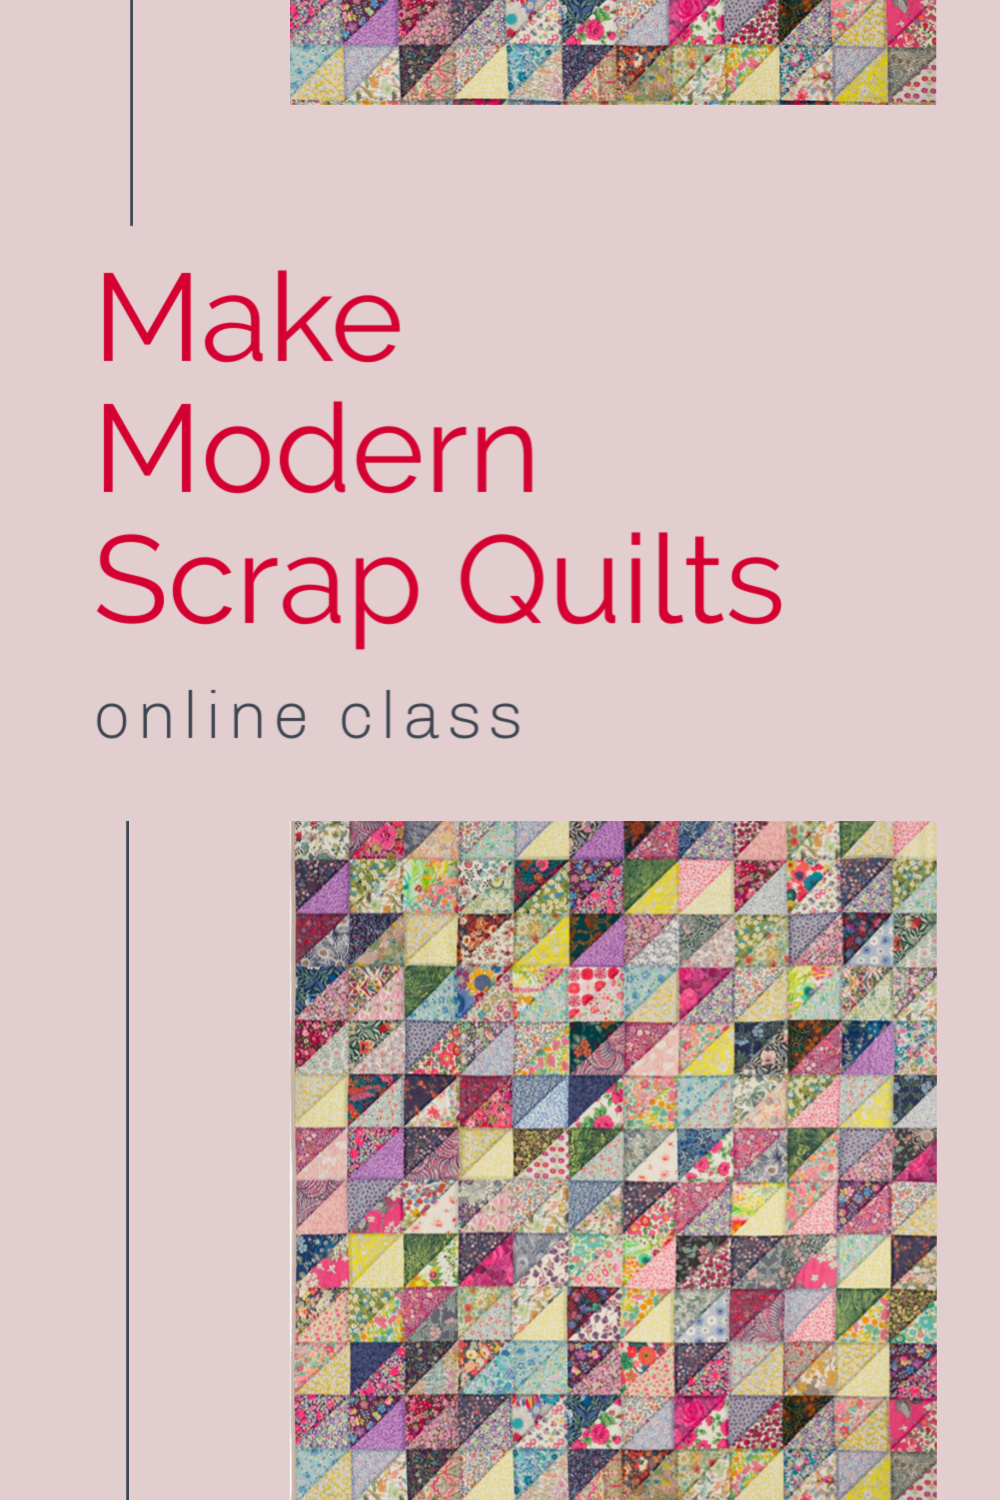 Make Modern Scrap quilt Using Color Value Online Class